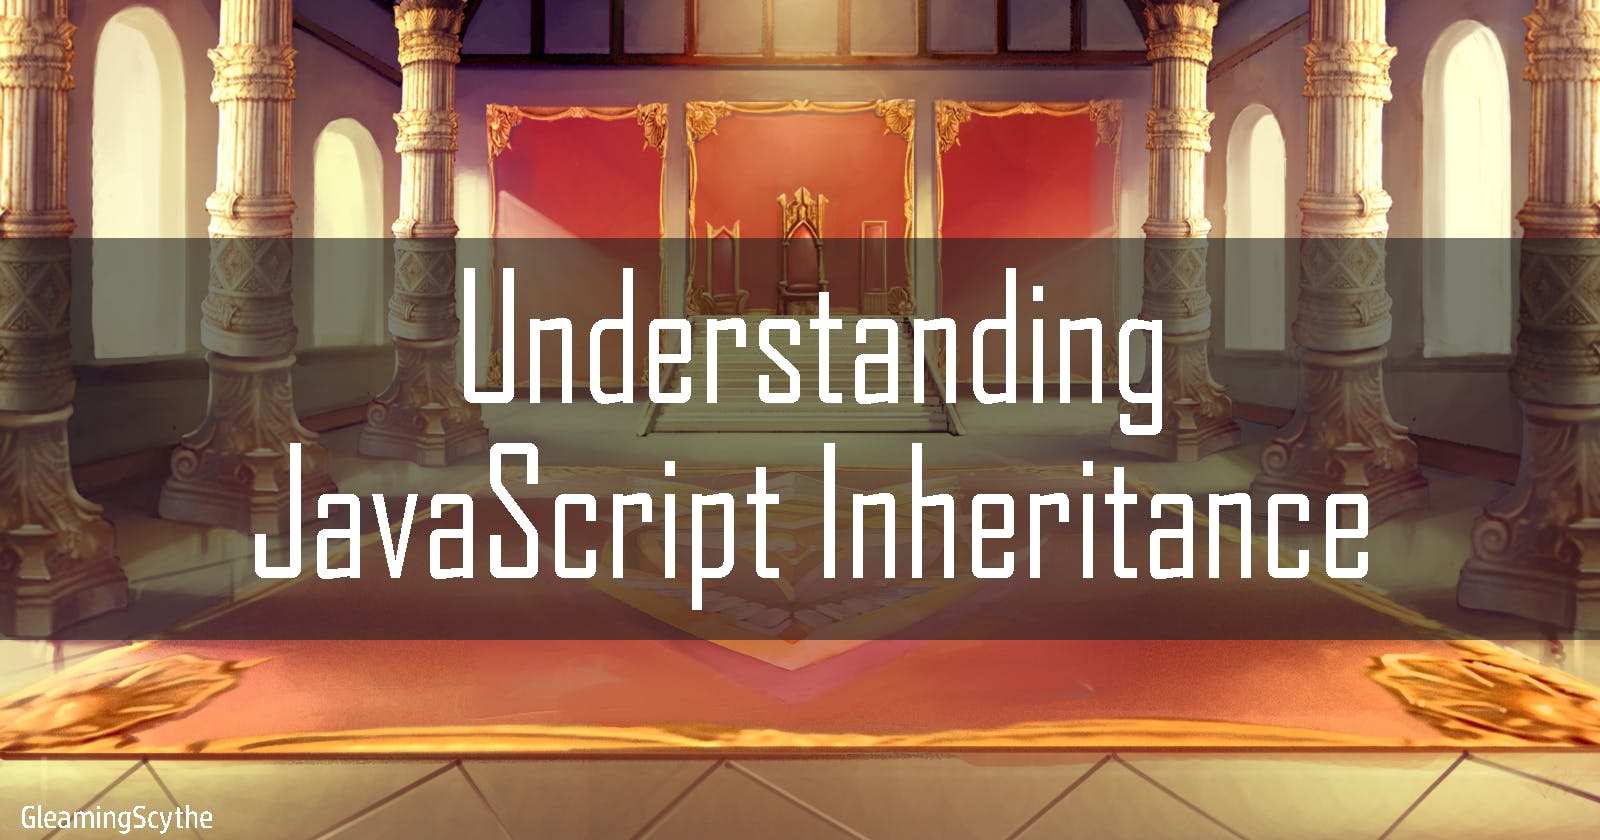 Introduction to JavaScript Inheritance